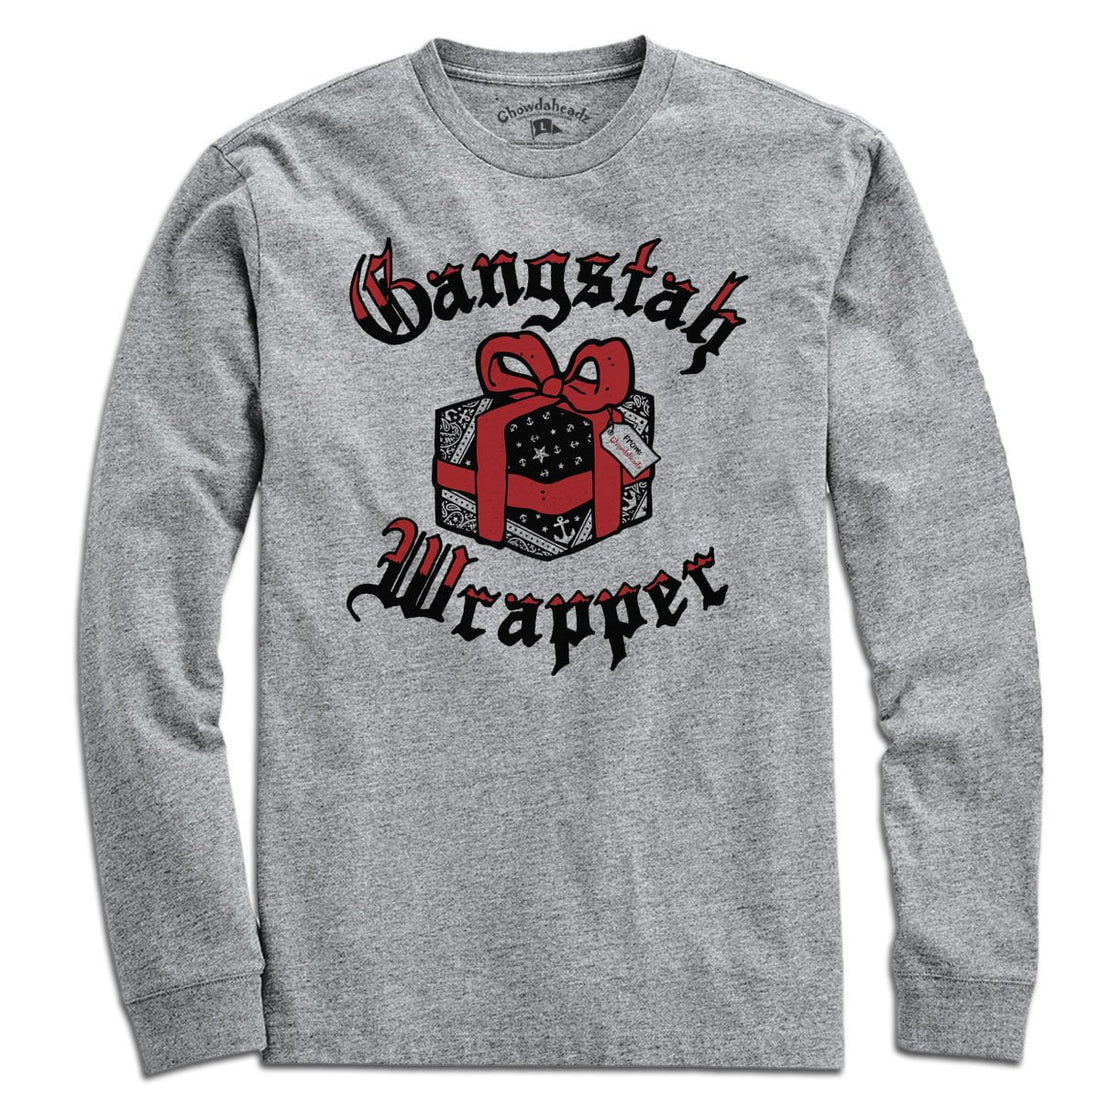 Gangstah Wrapper Holiday T-Shirt - Chowdaheadz